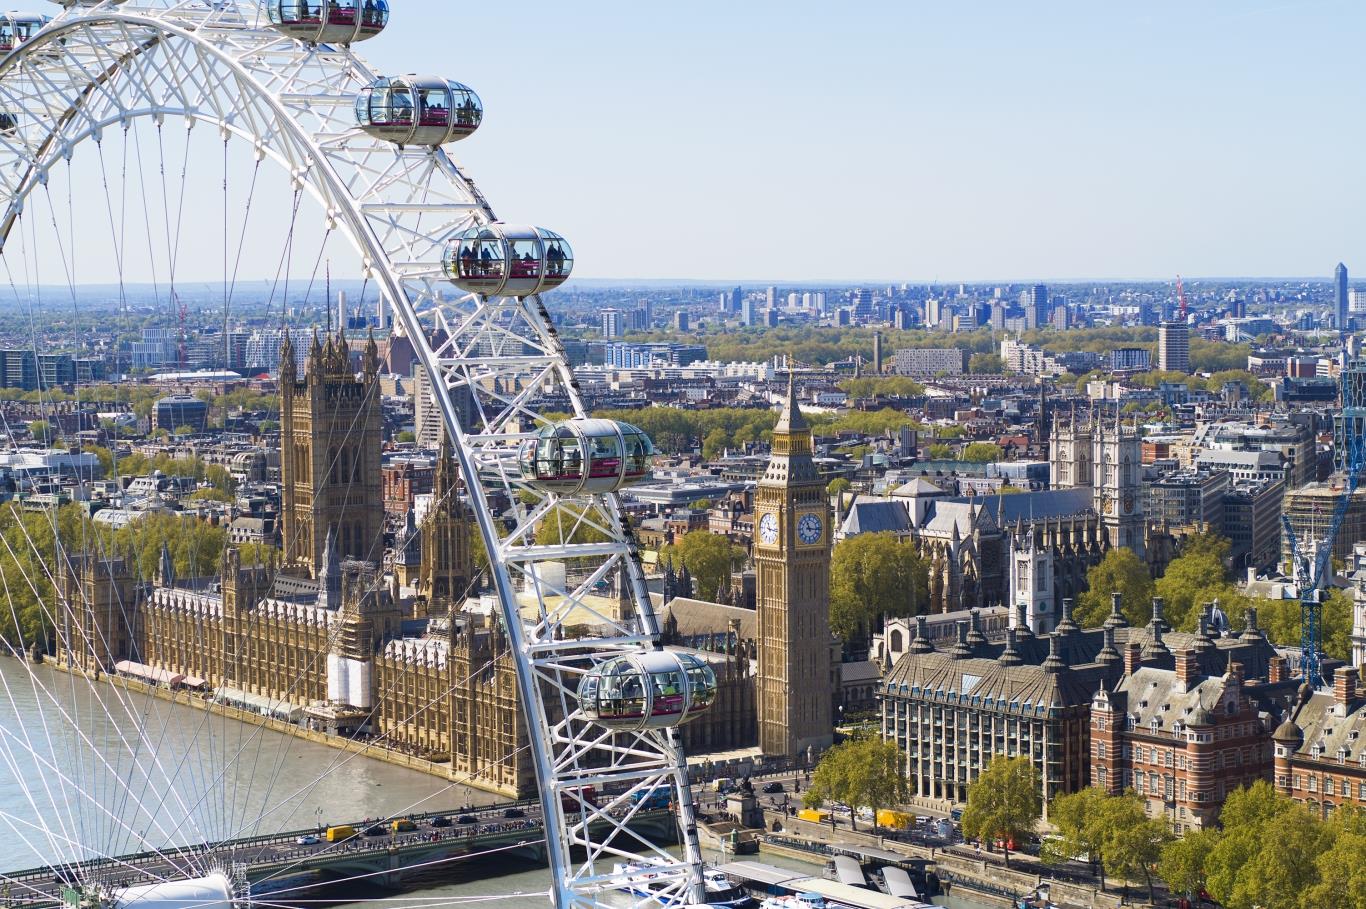 3. London Eye